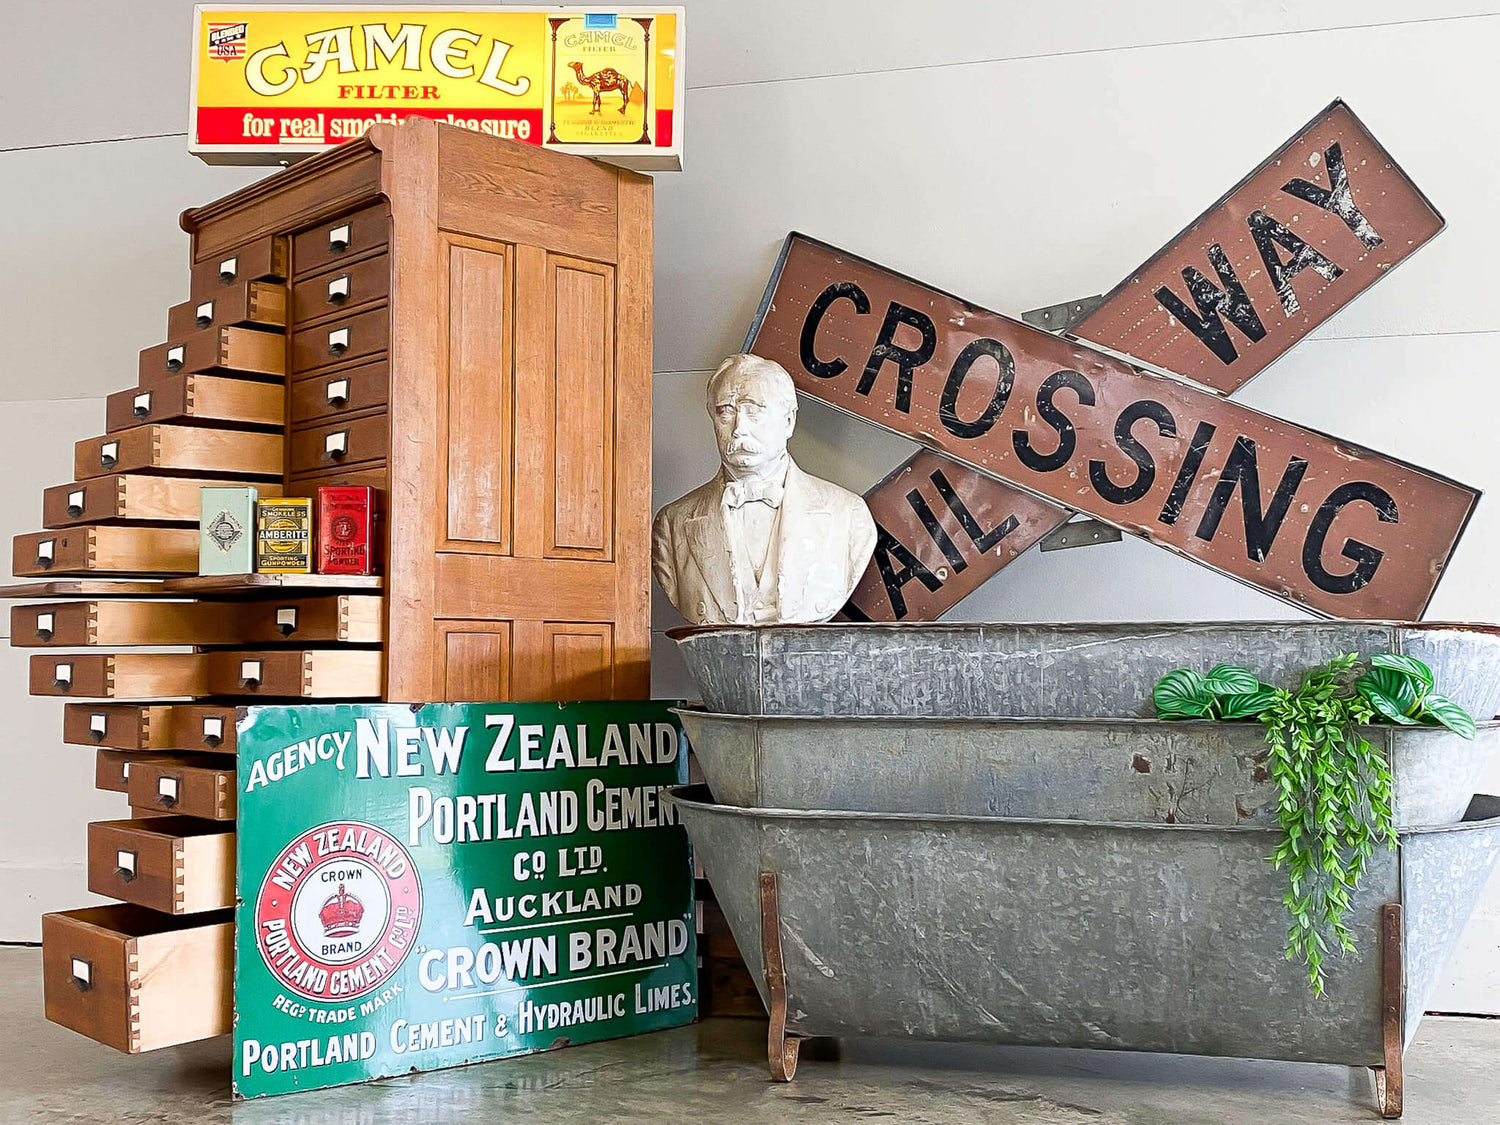 Salvage Place - Auckland's Antique Revolution